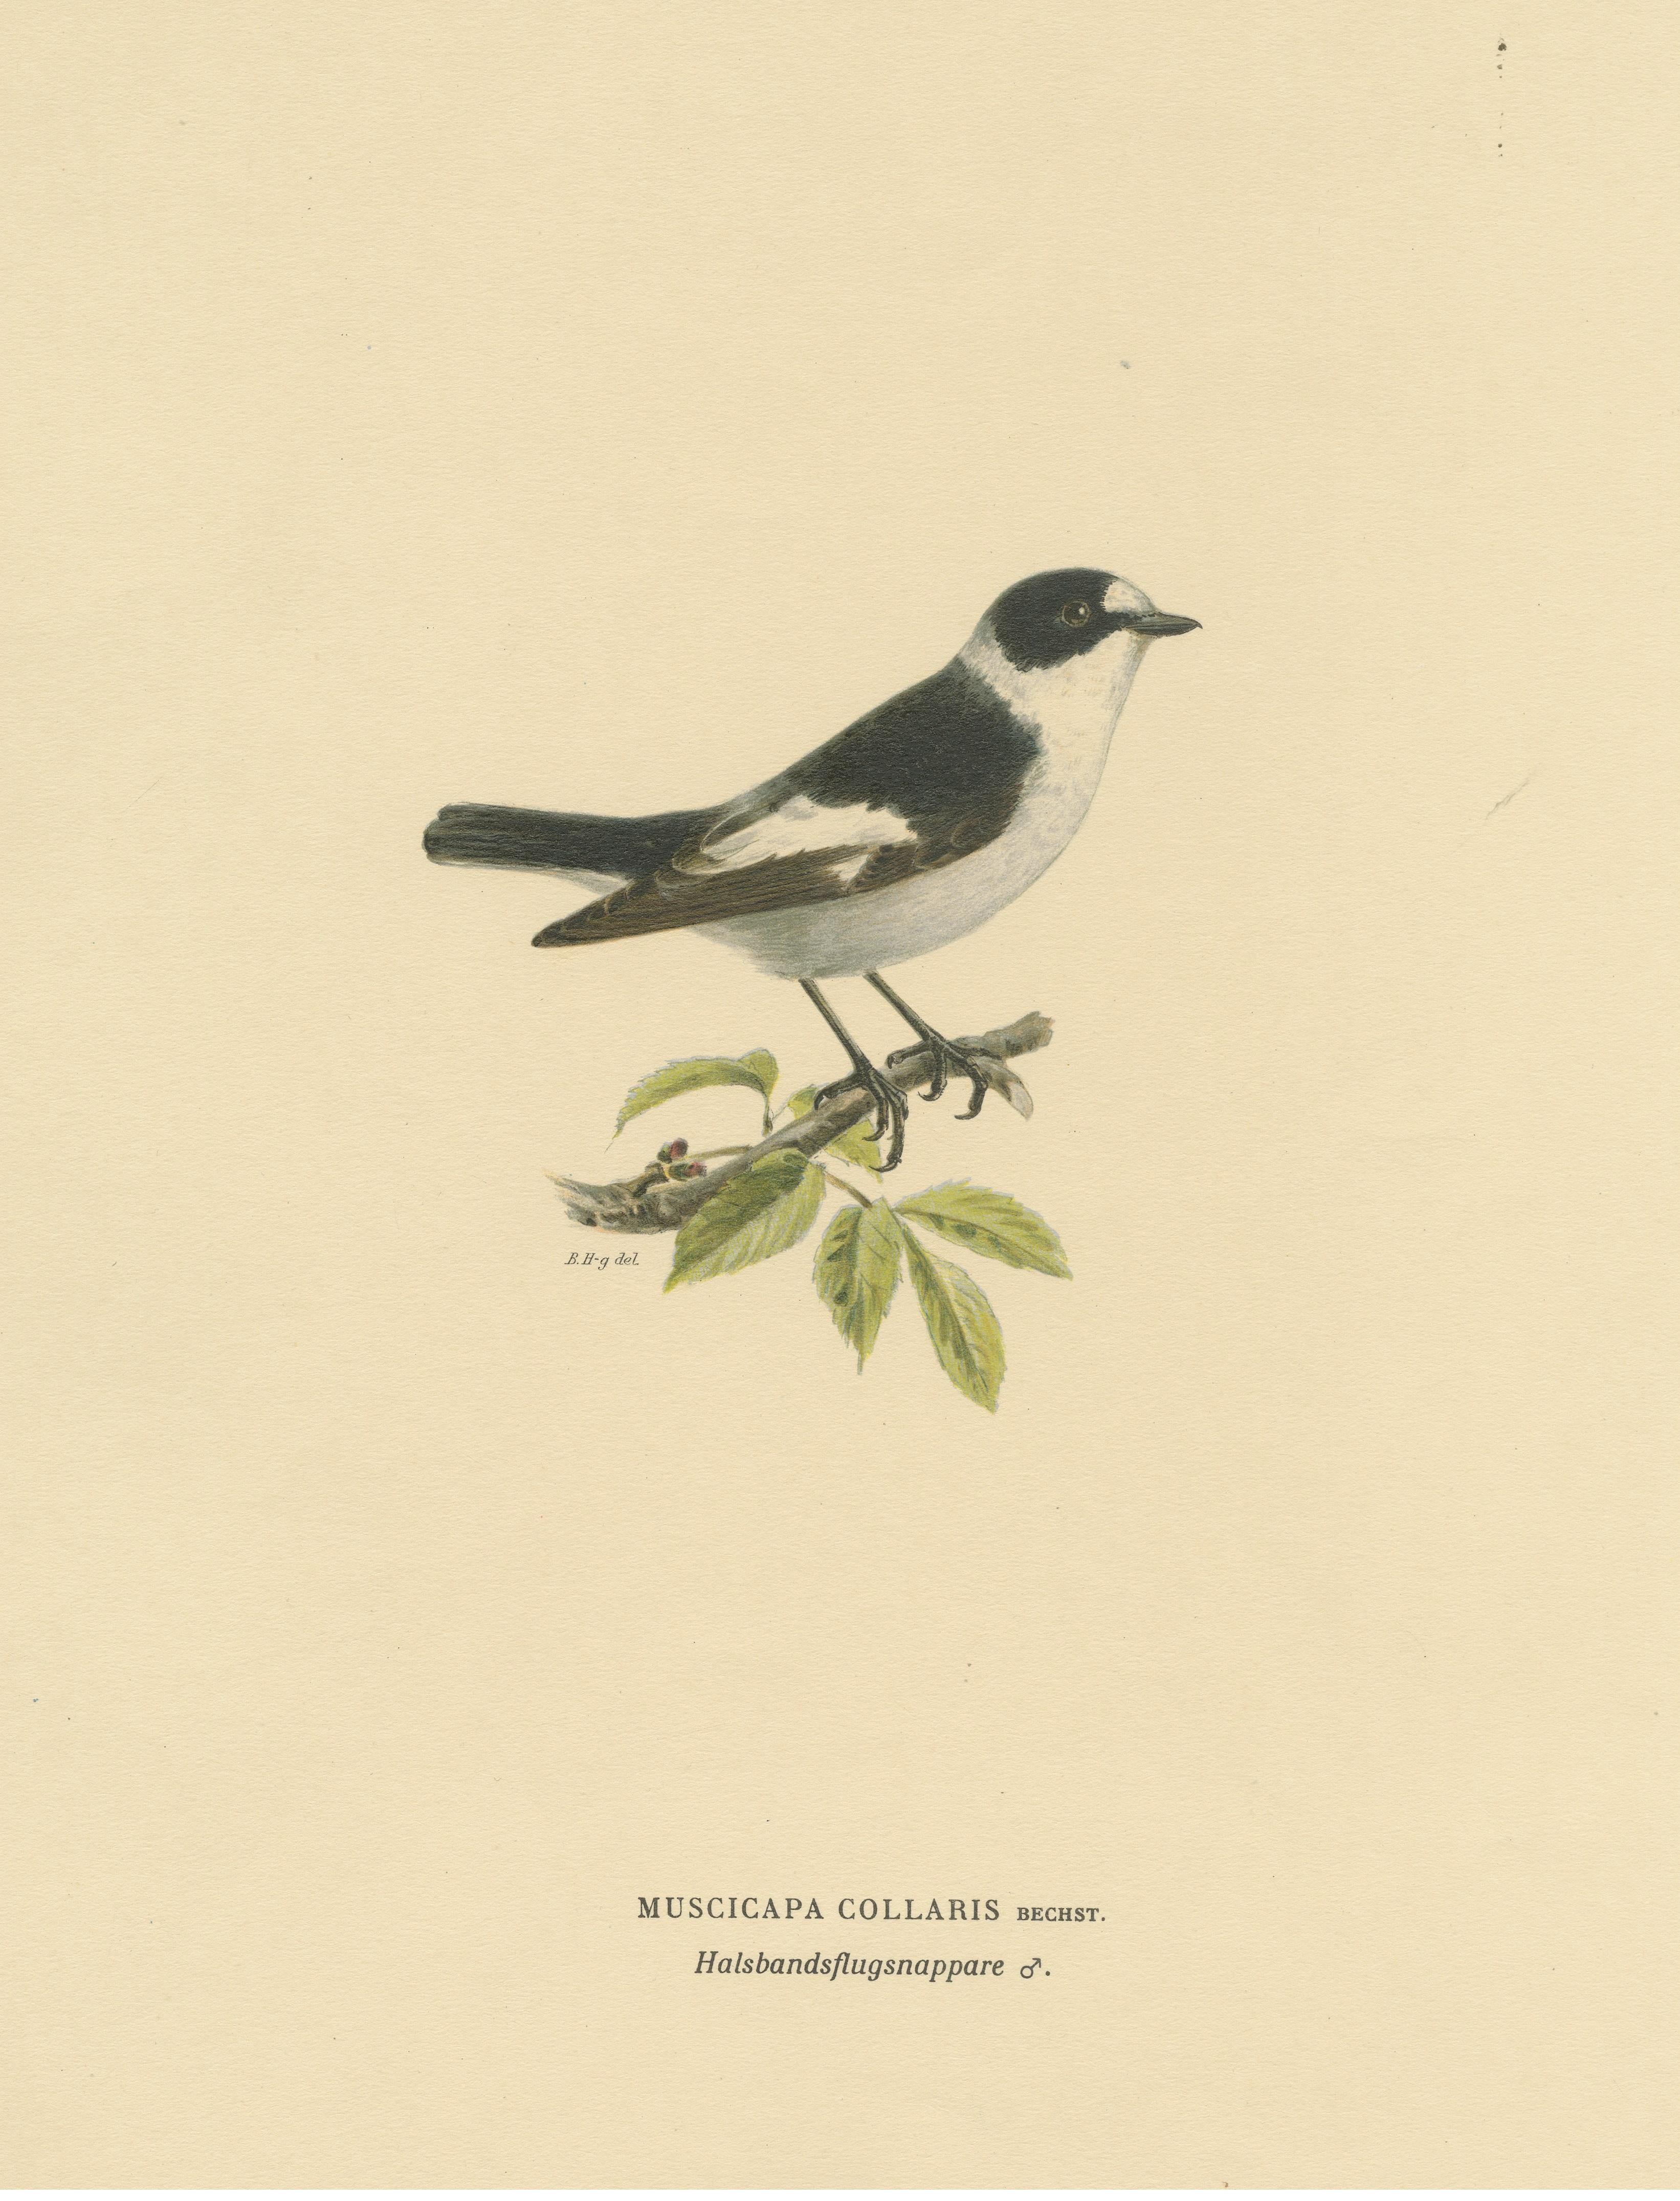 Paper Monochrome Elegance: Bird Print of The Collared Flycatcher by Von Wright, 1927 For Sale